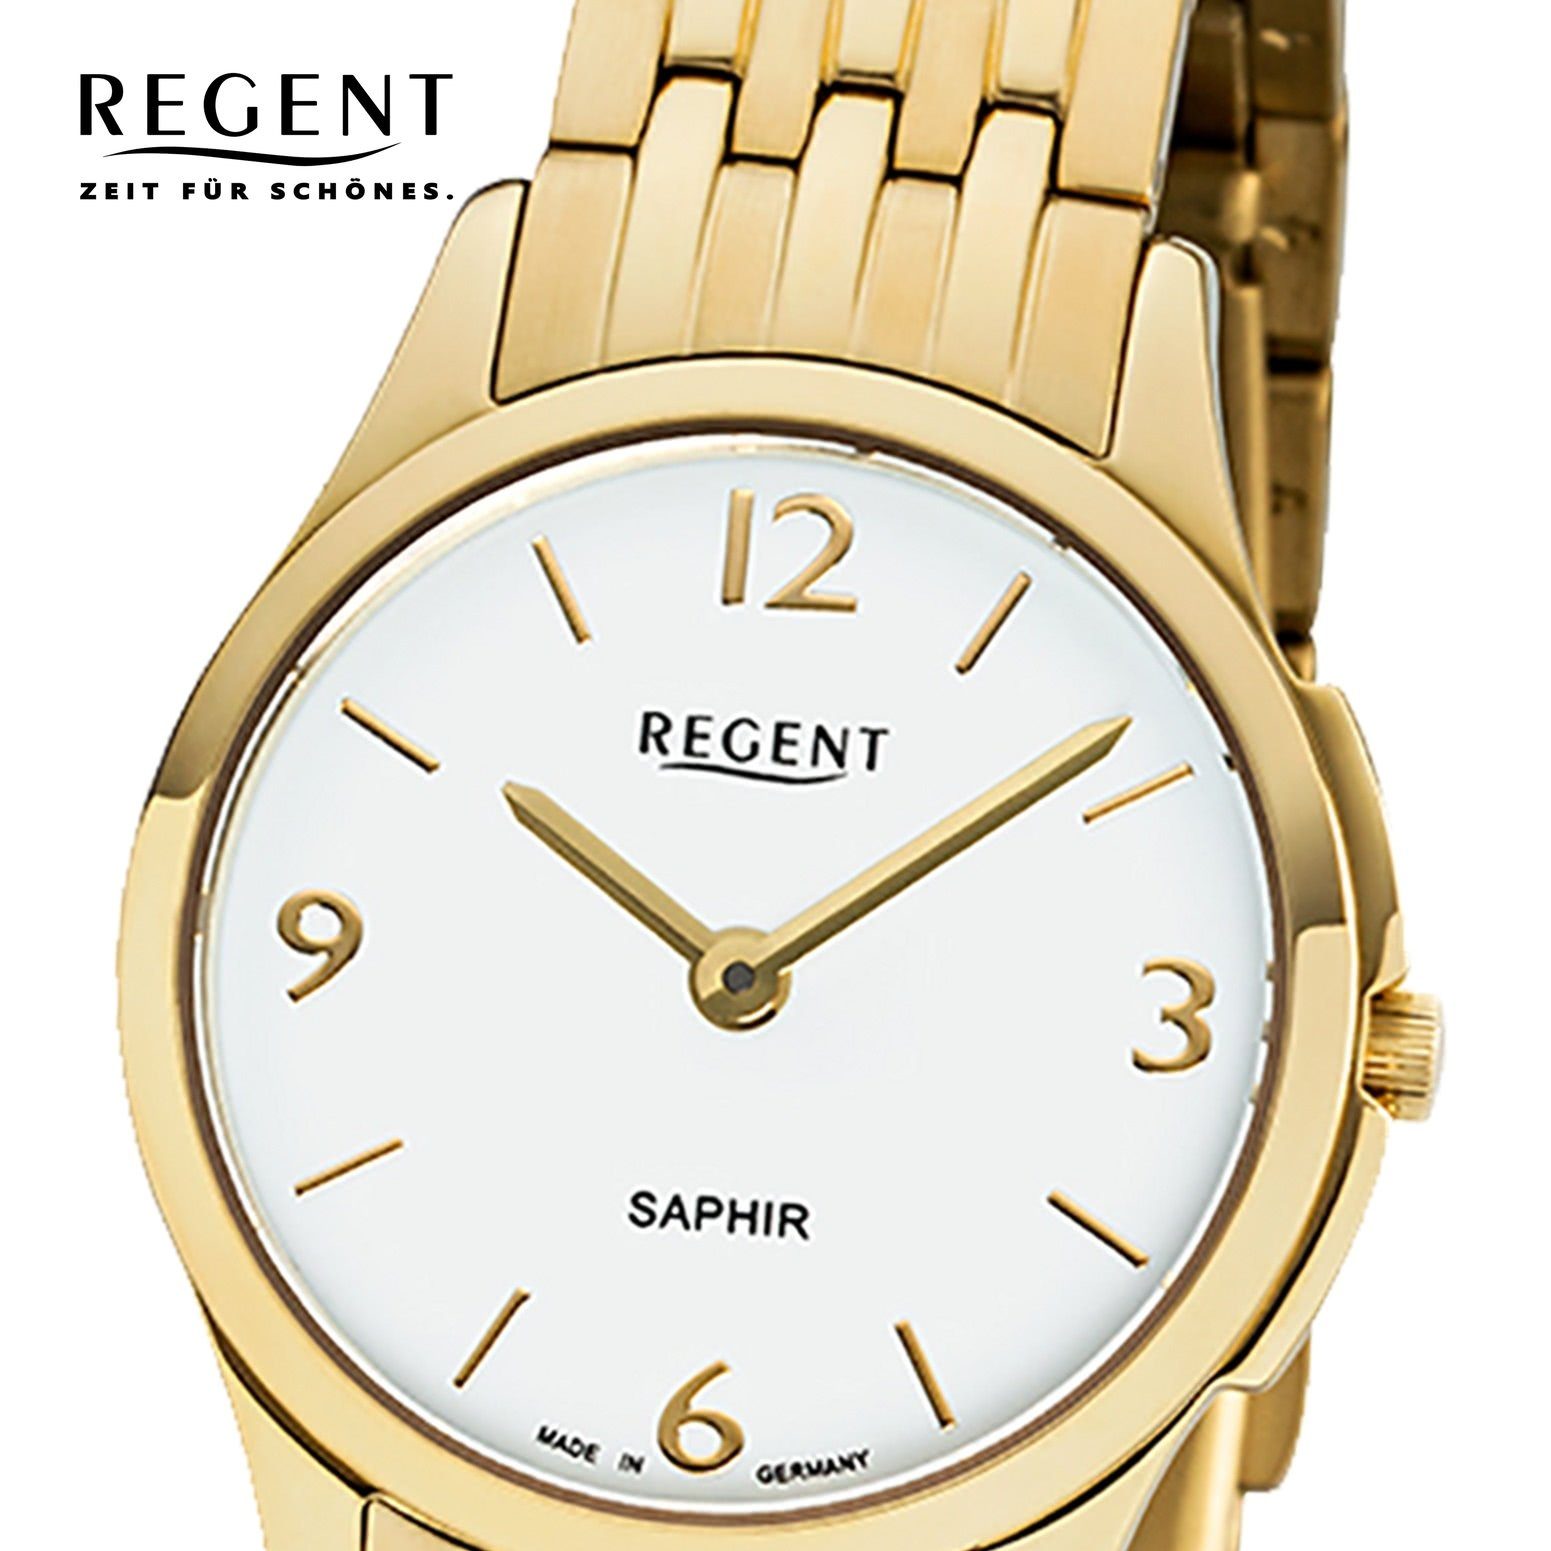 klein Armbanduhr Damen (ca. Damen Regent rund, Metallarmband Regent Quarz, GM-1619 Uhr Quarzuhr Metall 28mm),